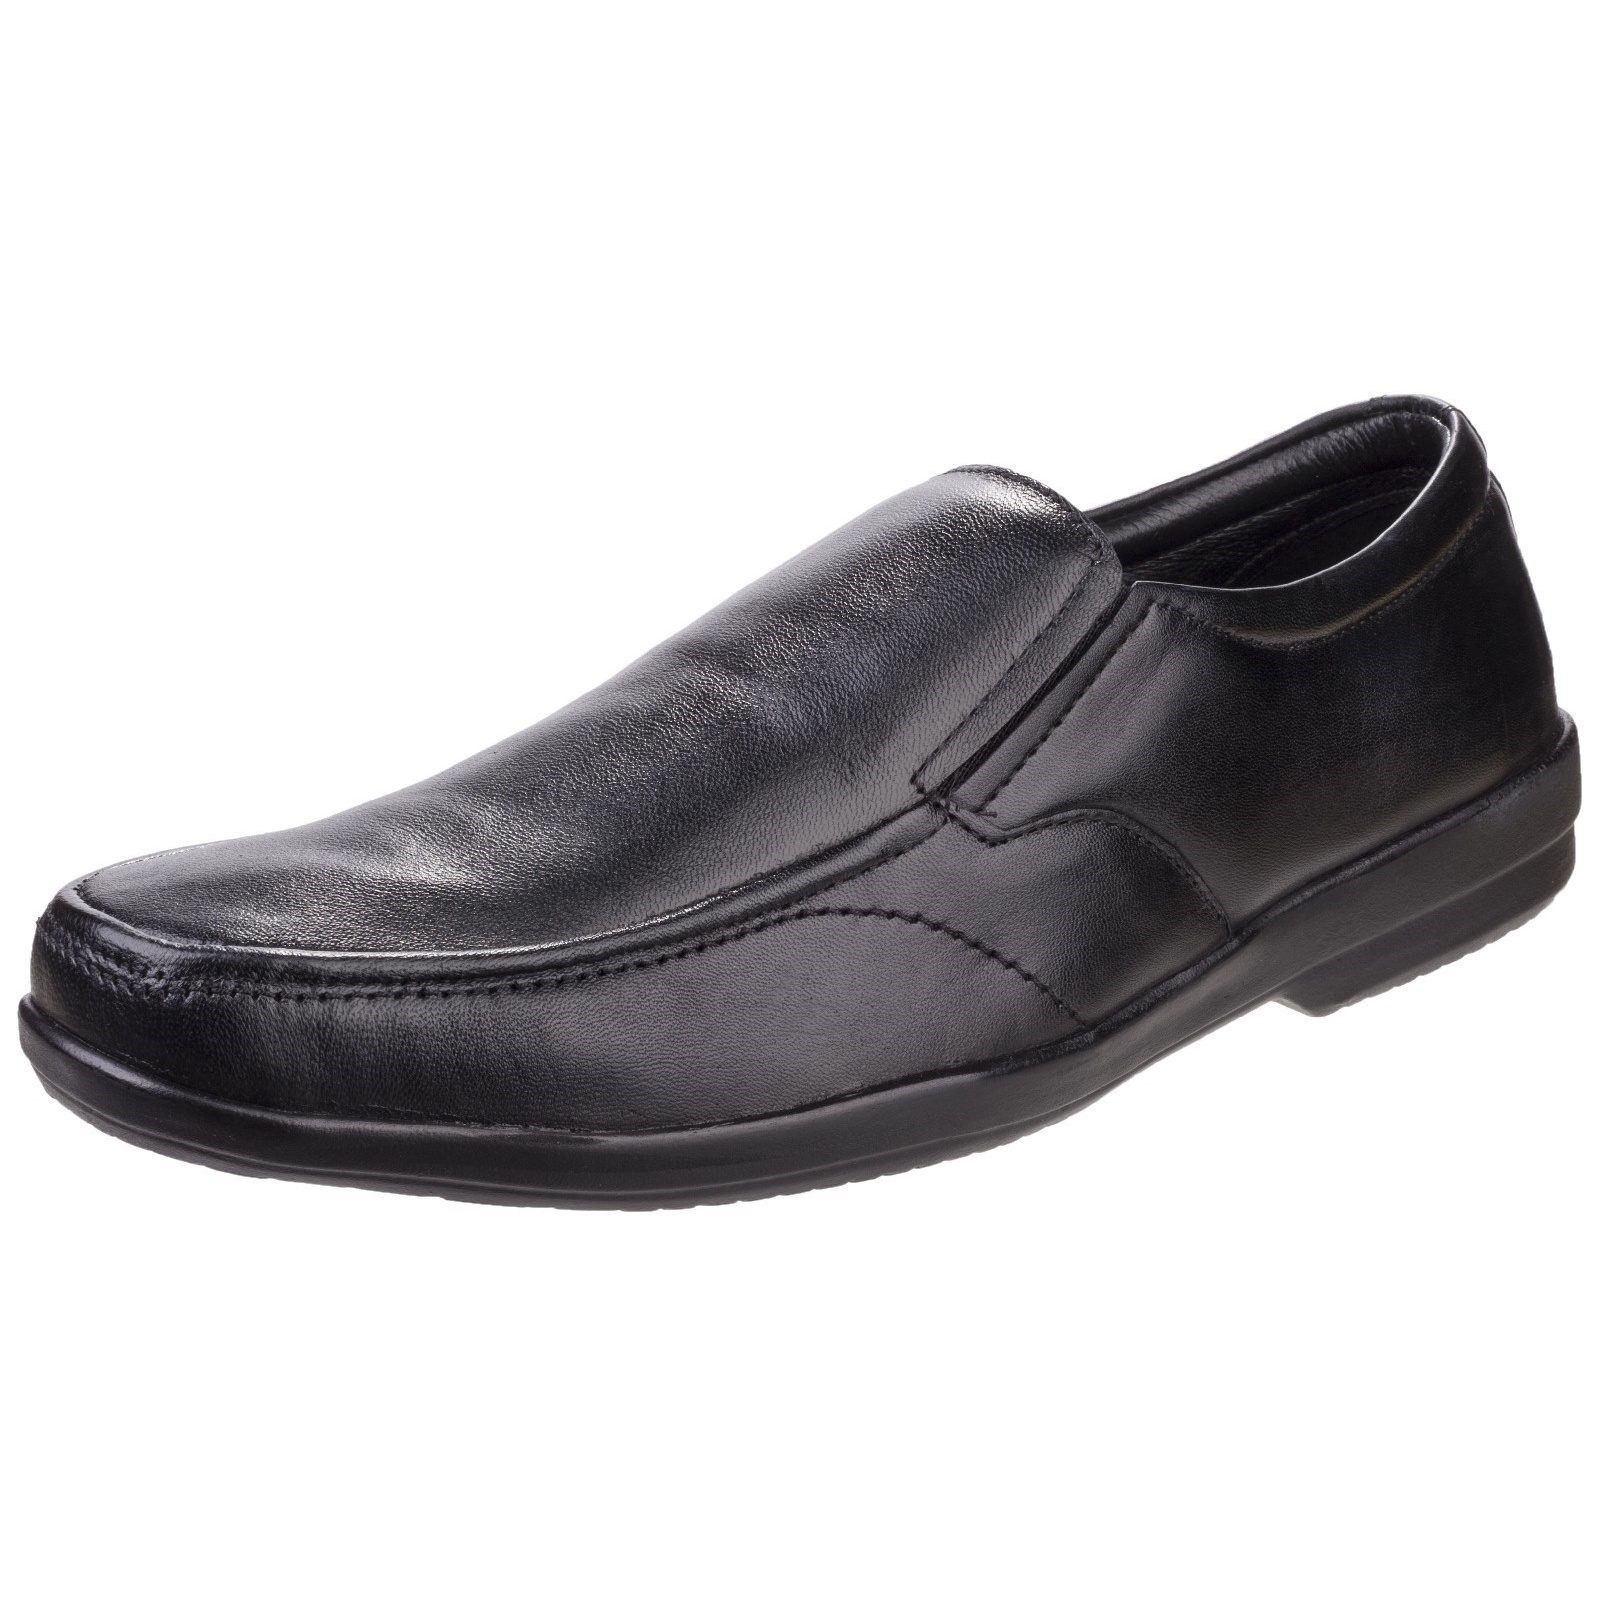 Fleet & Foster Mens Alan Formal Apron Toe Slip On Shoes - image 4 of 6